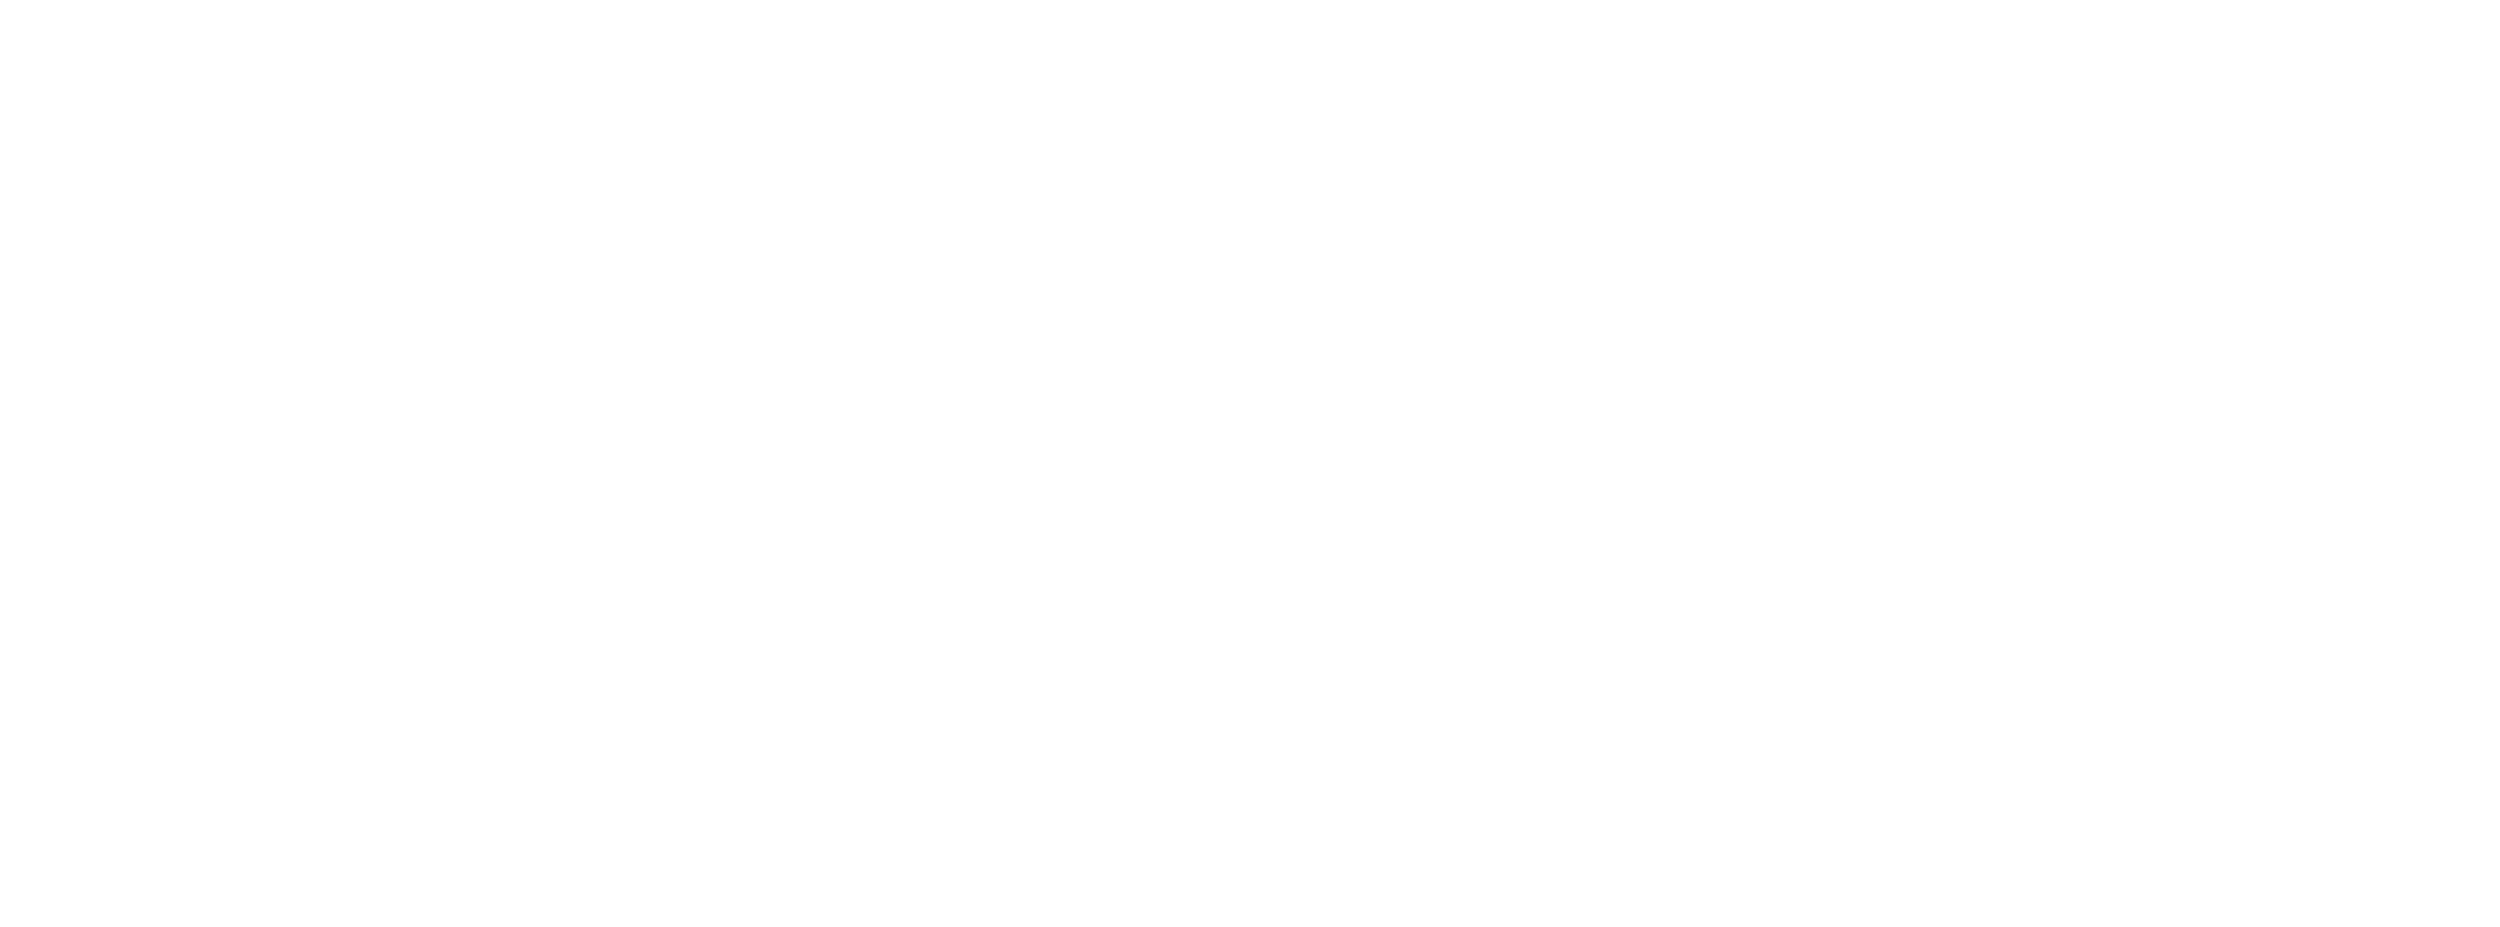 ENTINT REALTY GROUP, LLC